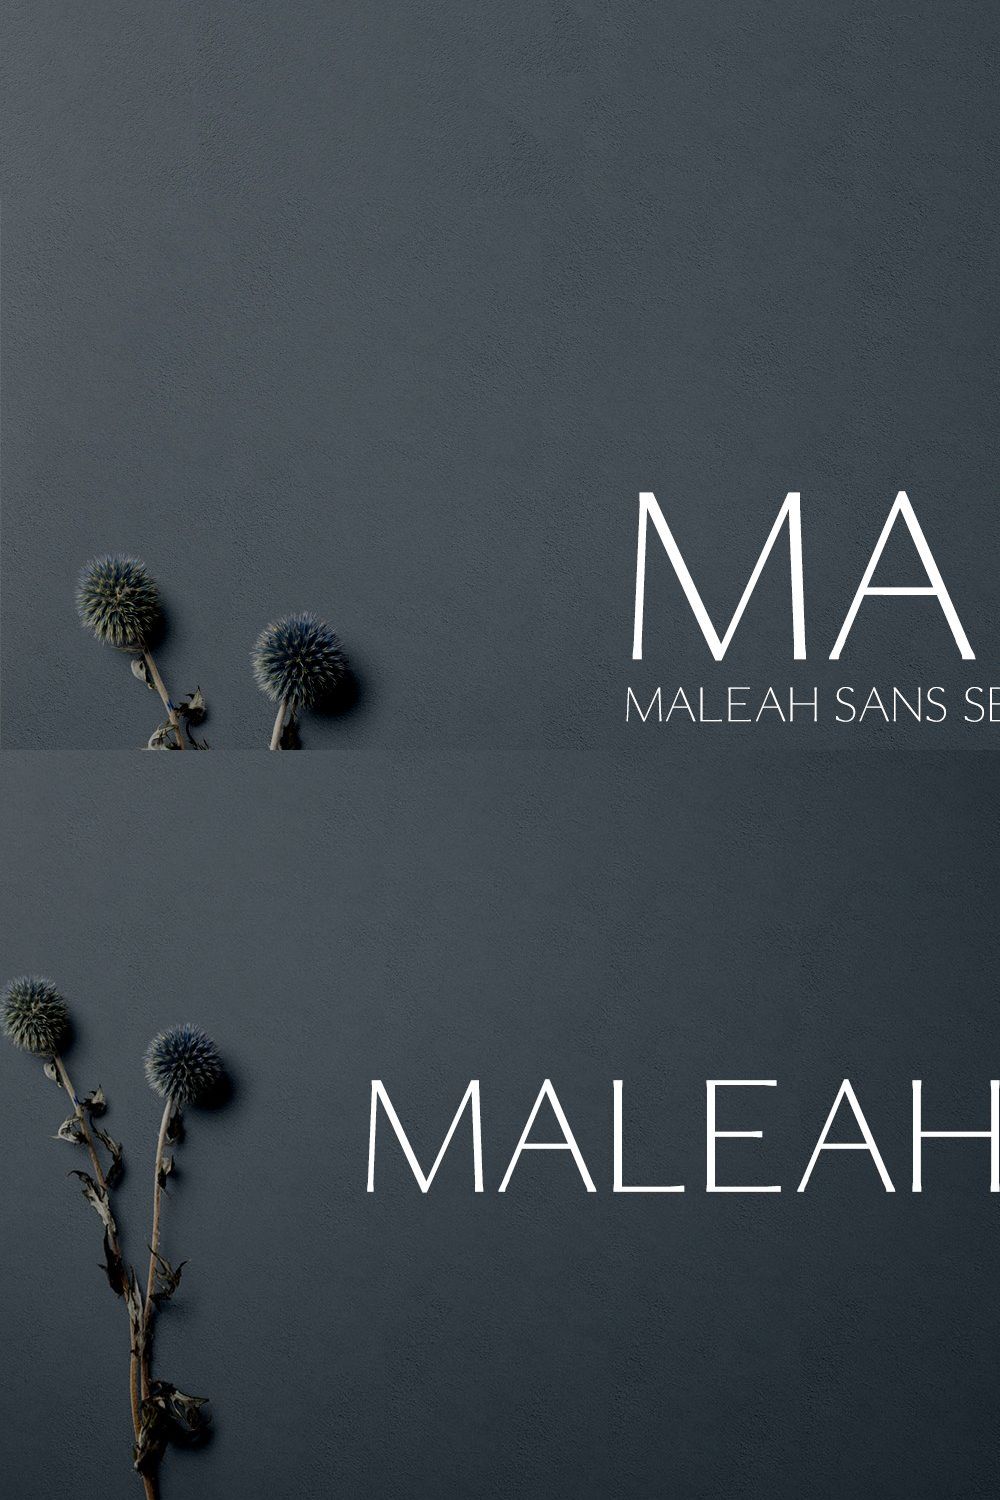 Maleah Sans Serif 4 Font Family Pack pinterest preview image.